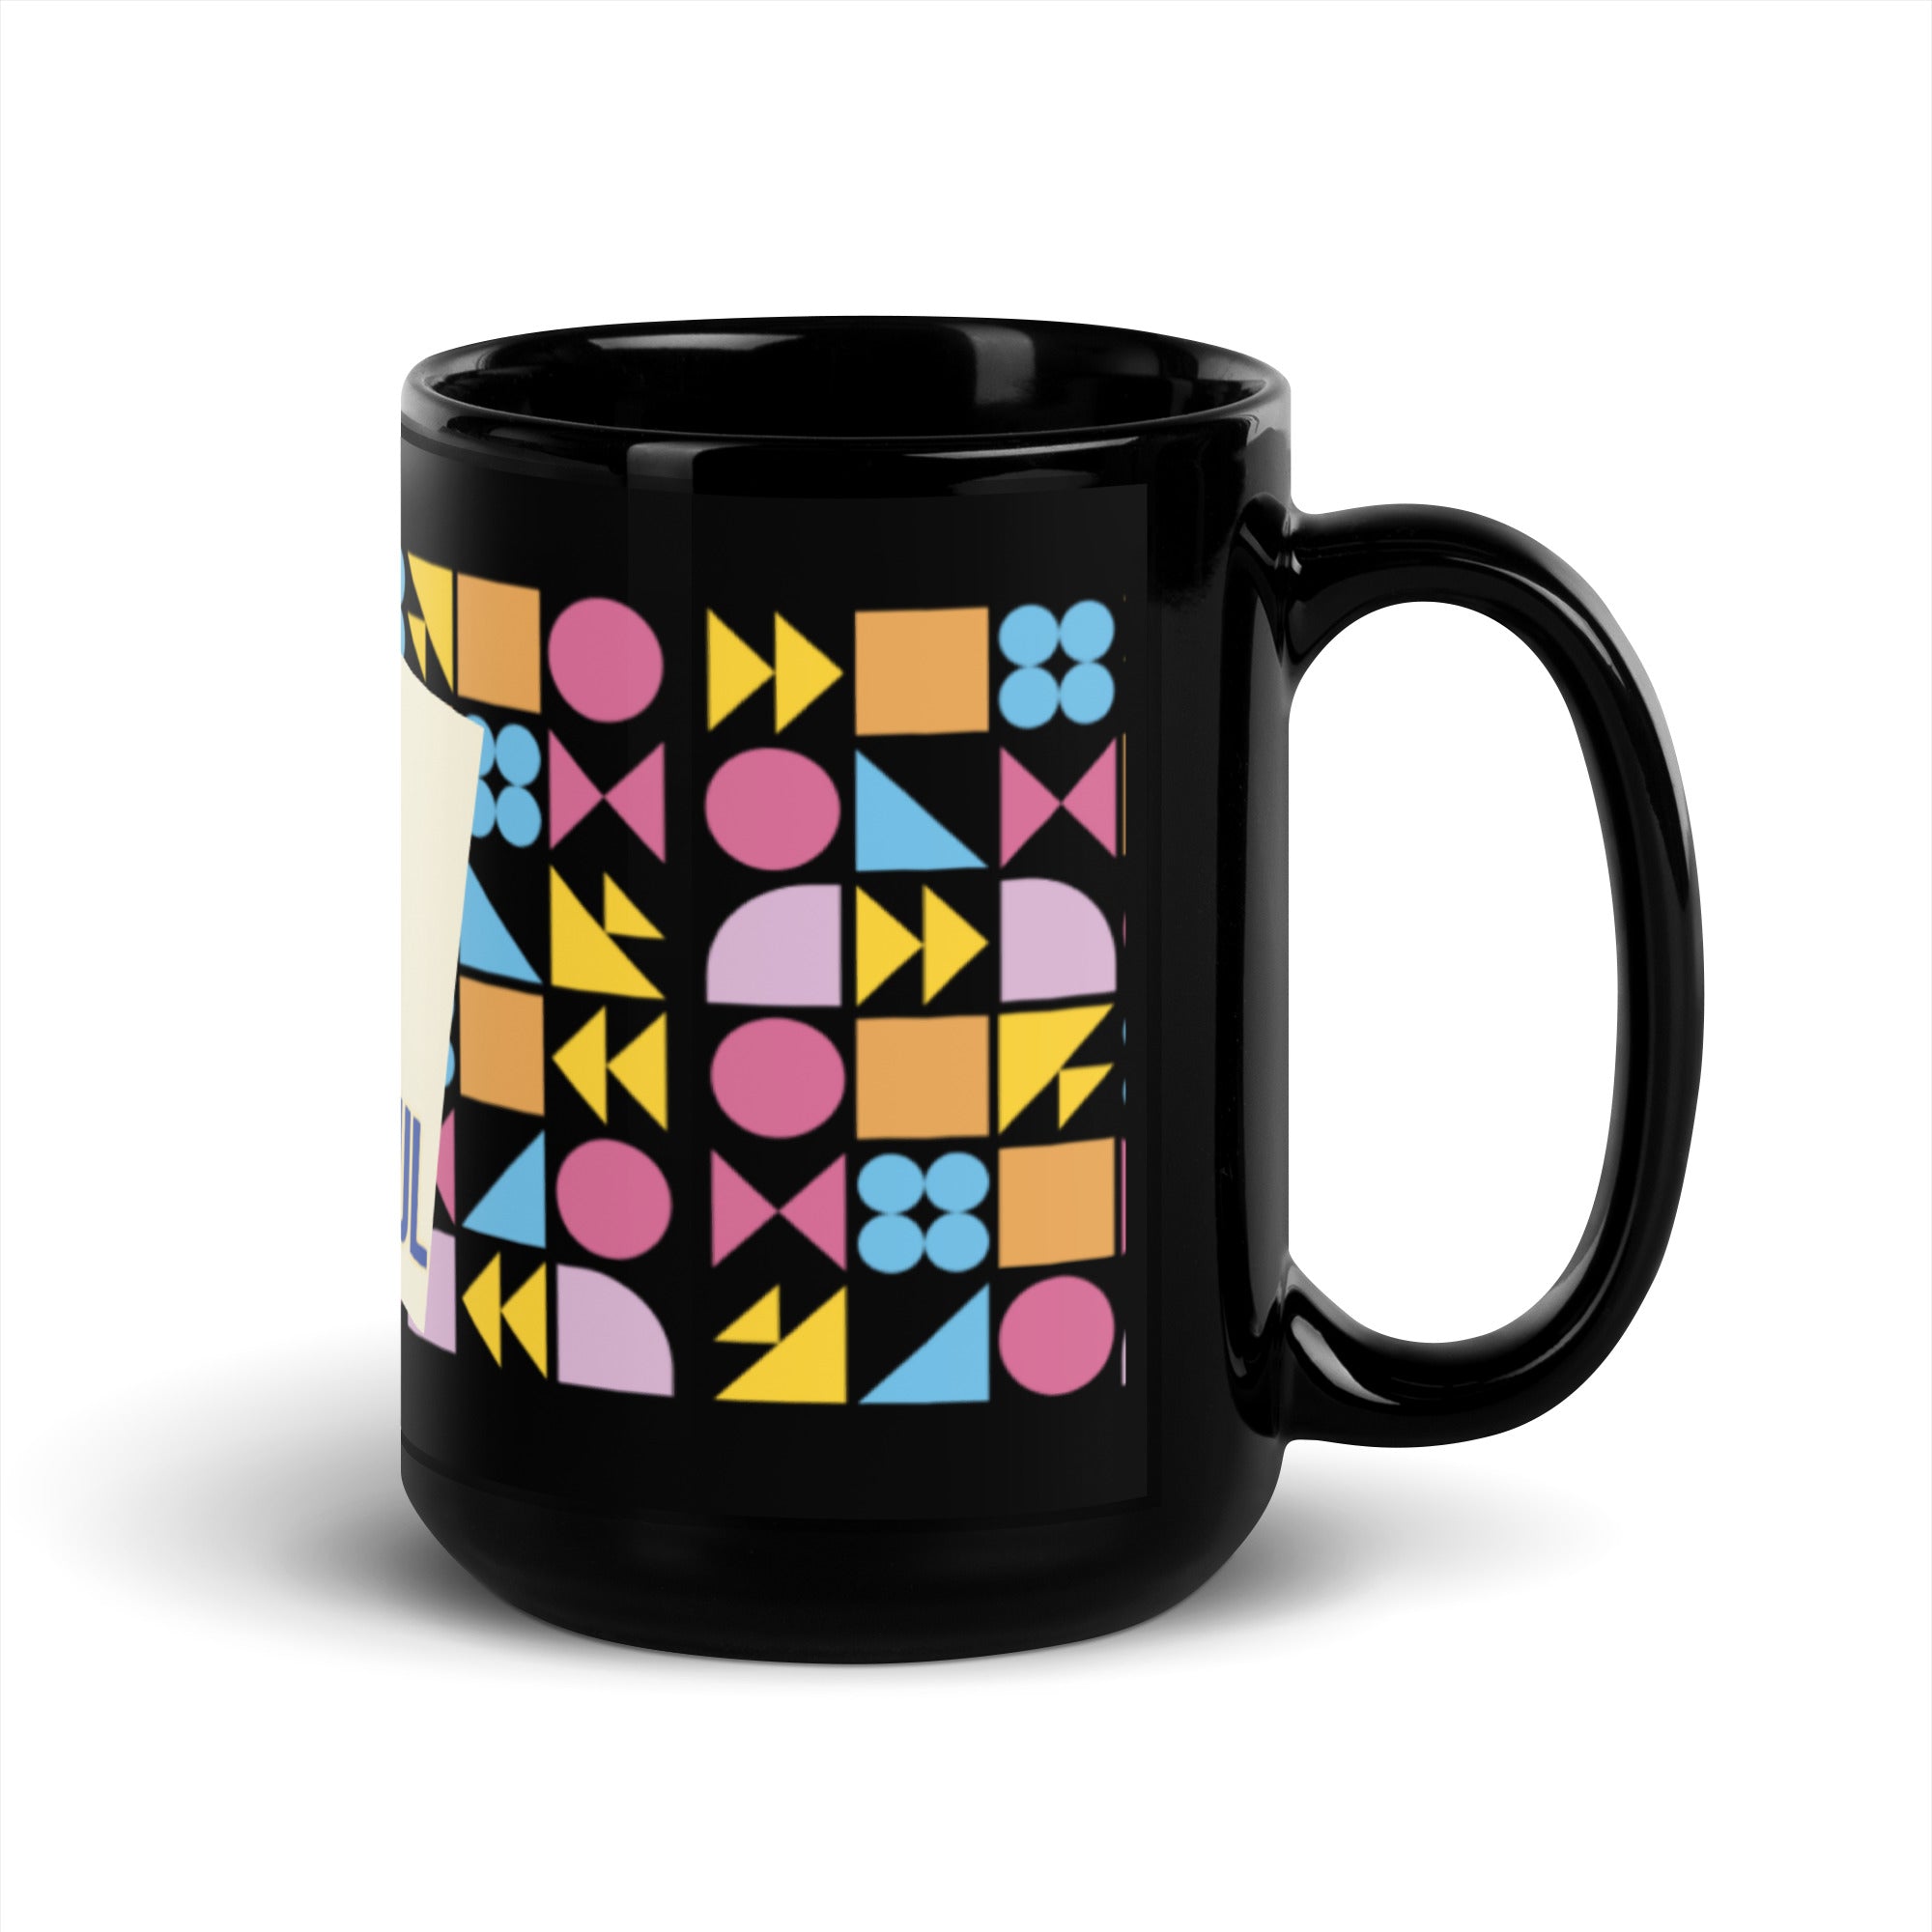 GloWell Designs - Black Glossy Mug - Affirmation Quote - I Am Bold & Beautiful - GloWell Designs